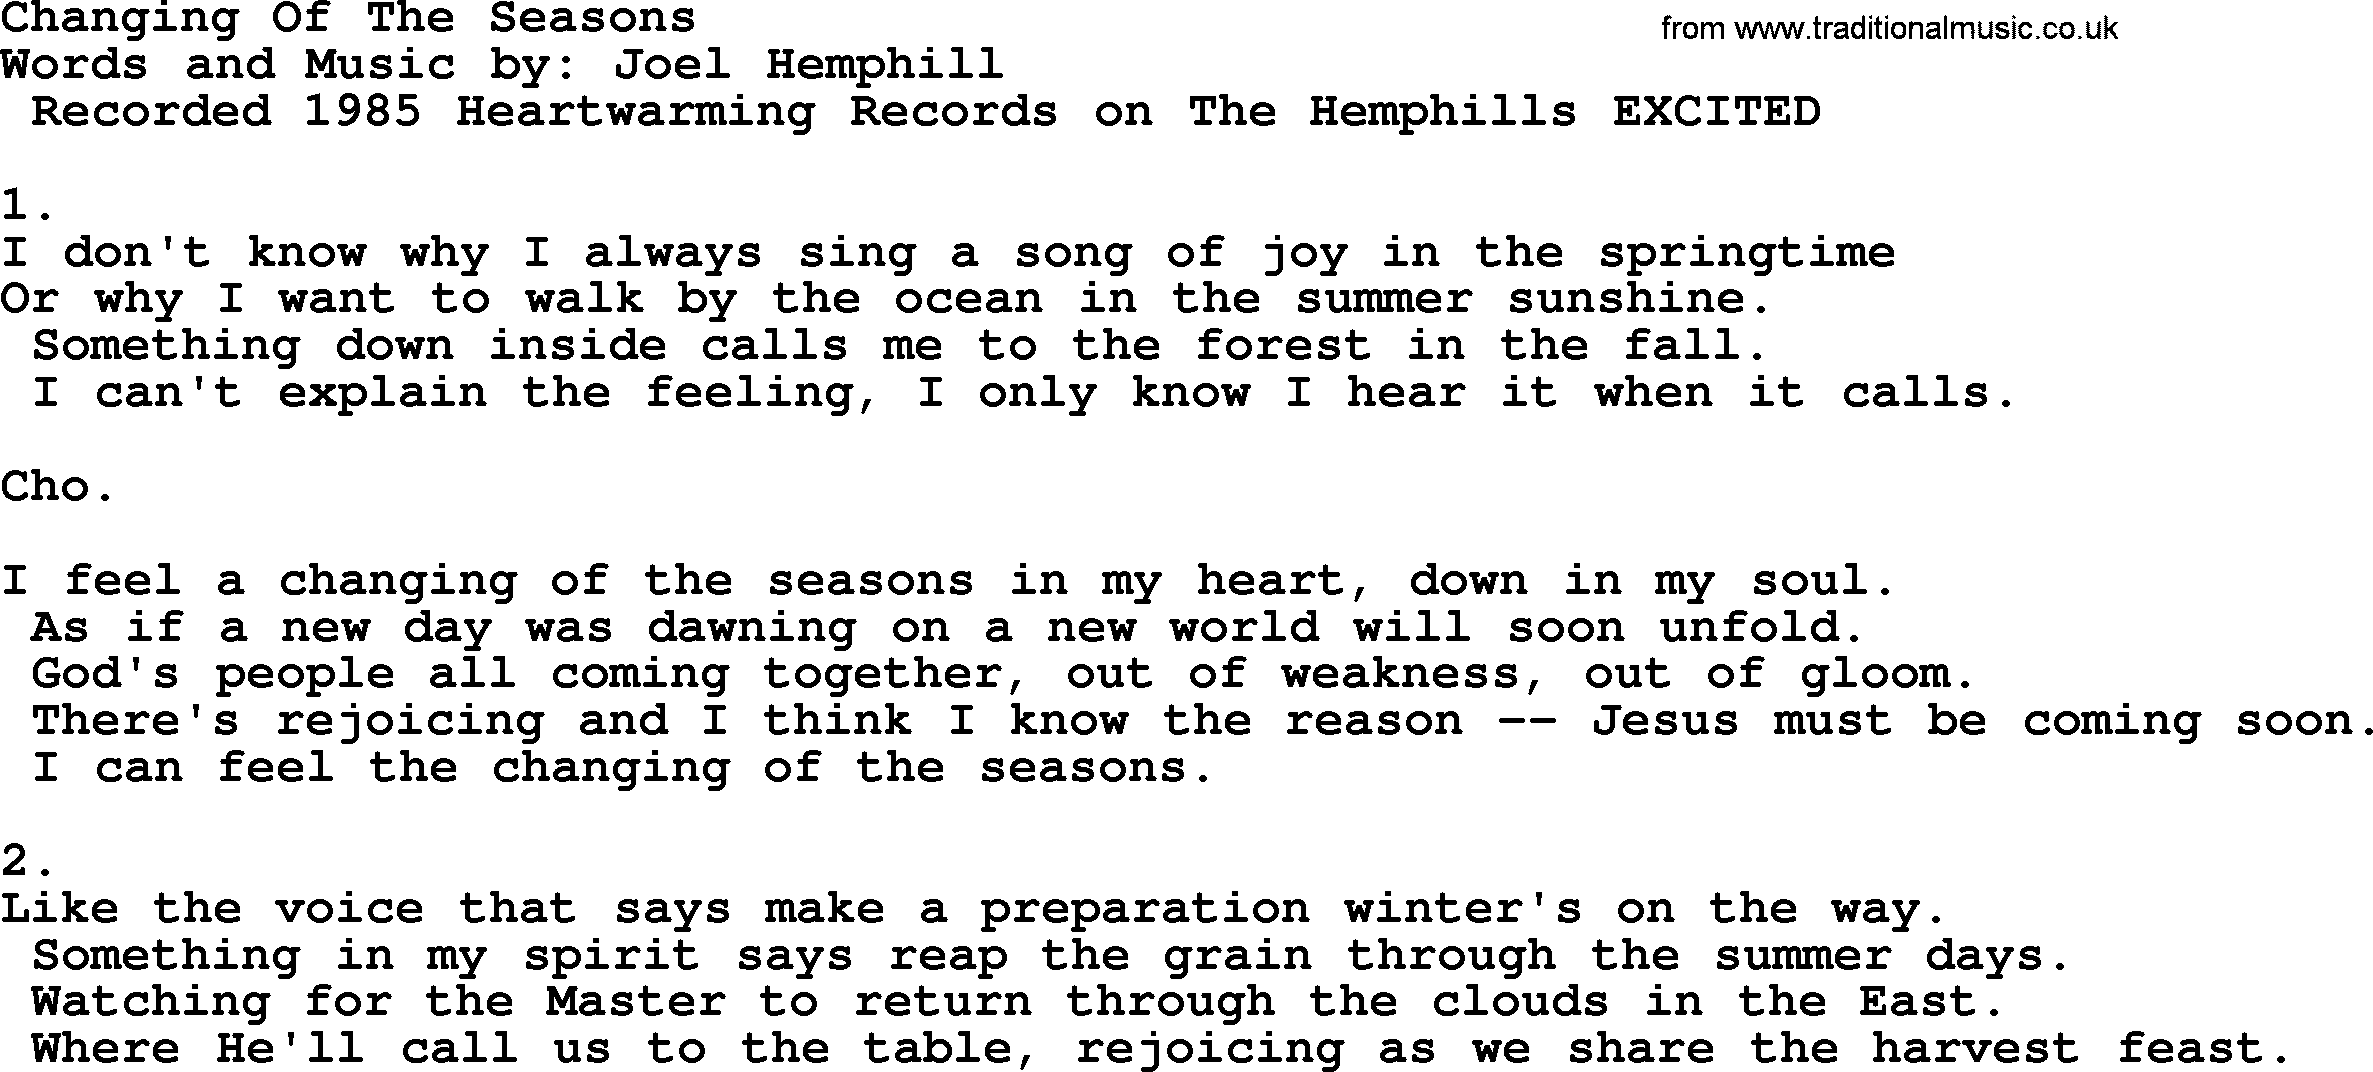 Apostolic & Pentecostal Hymns and Songs, Hymn: Changing Of The Seasons lyrics and PDF